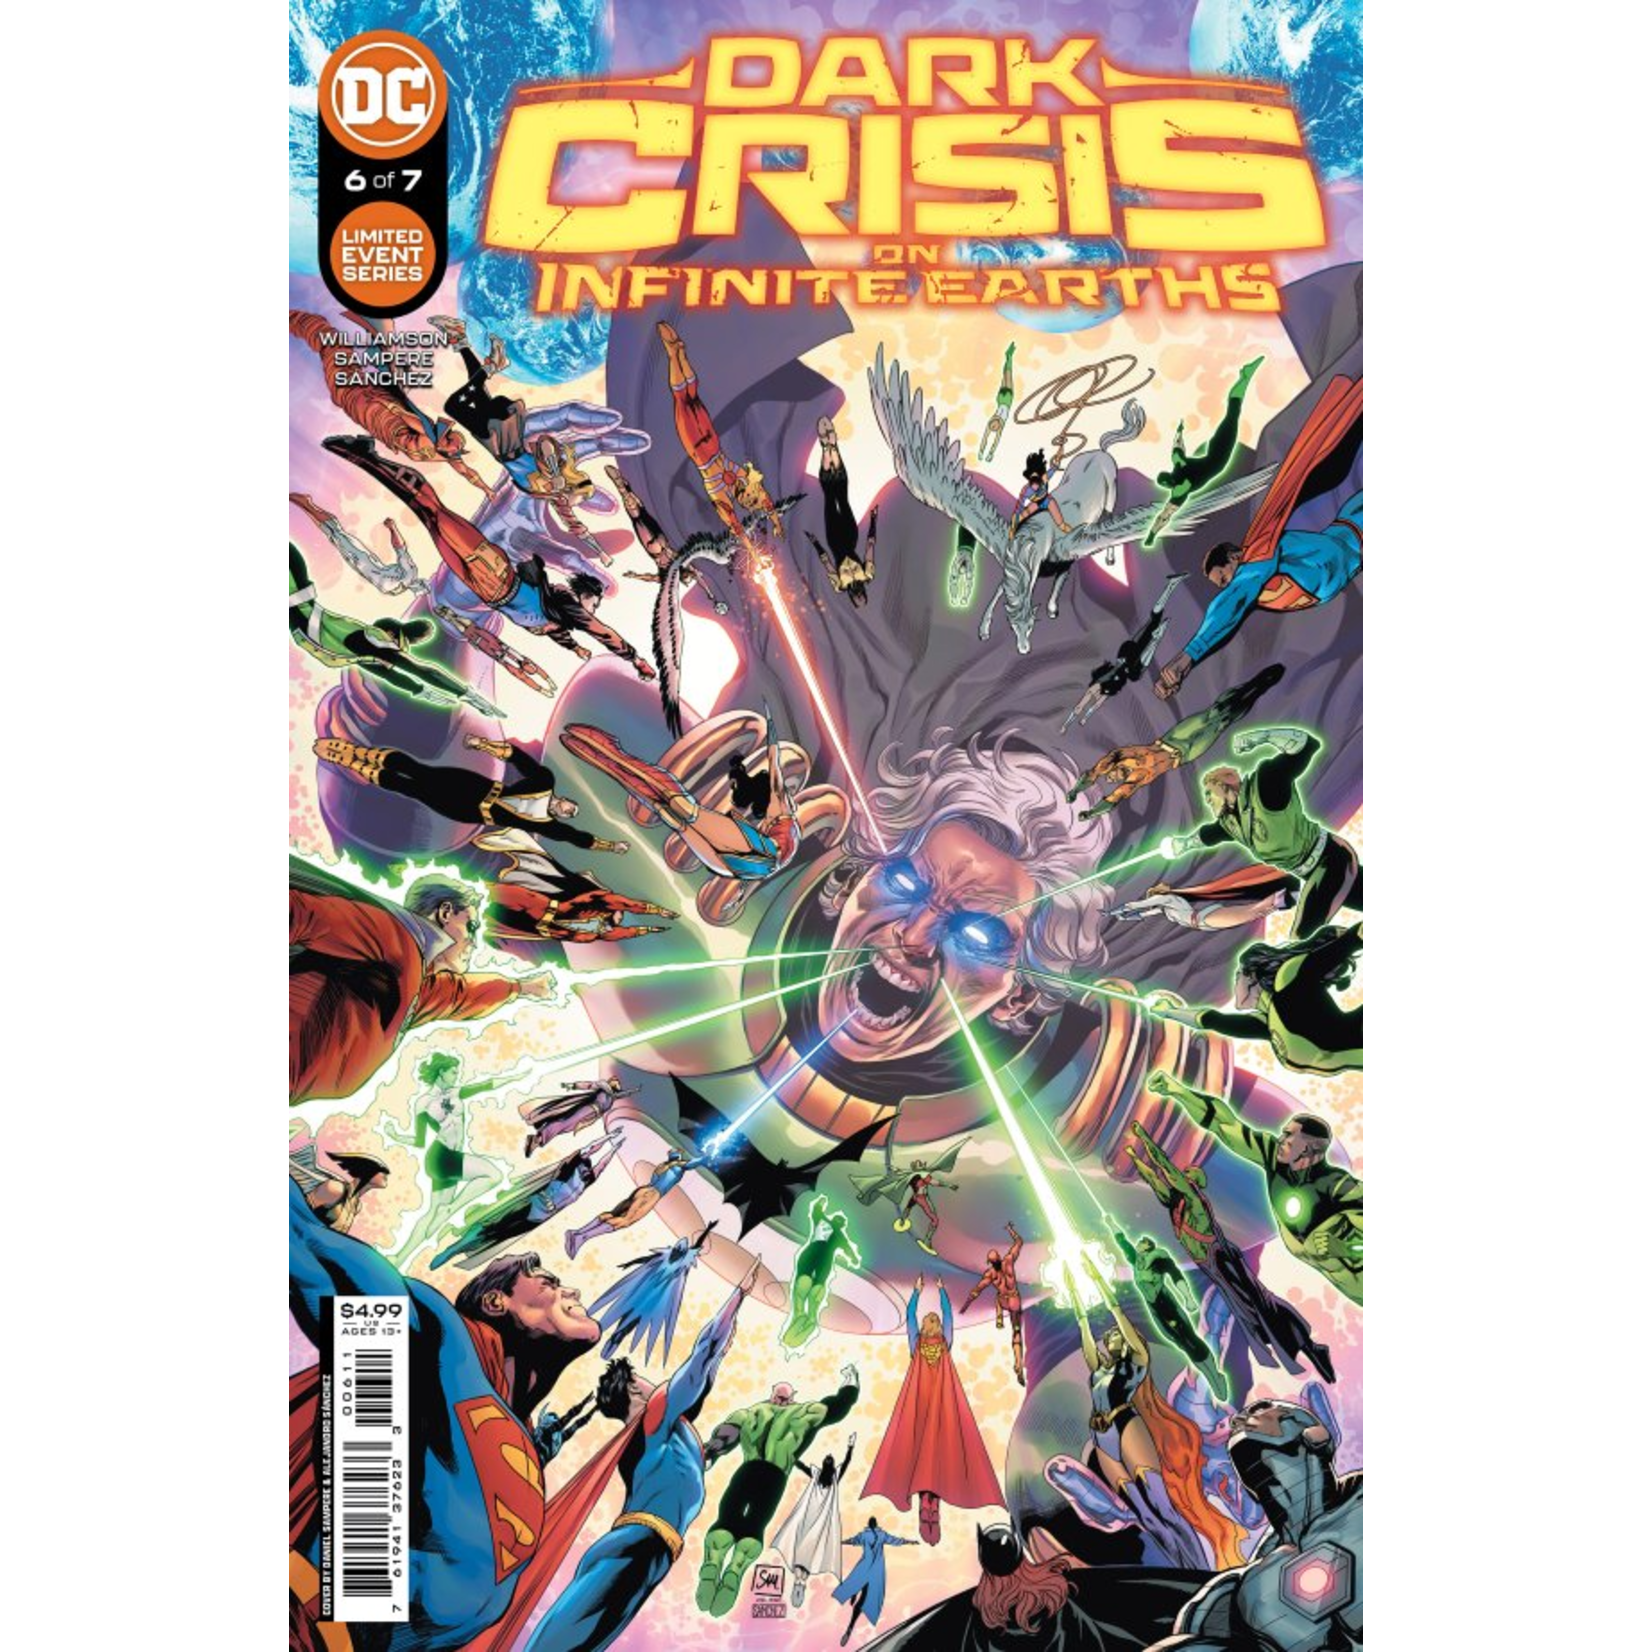 DC Comics DARK CRISIS #6 (OF 7) CVR A SAMPERE/SANCHEZ